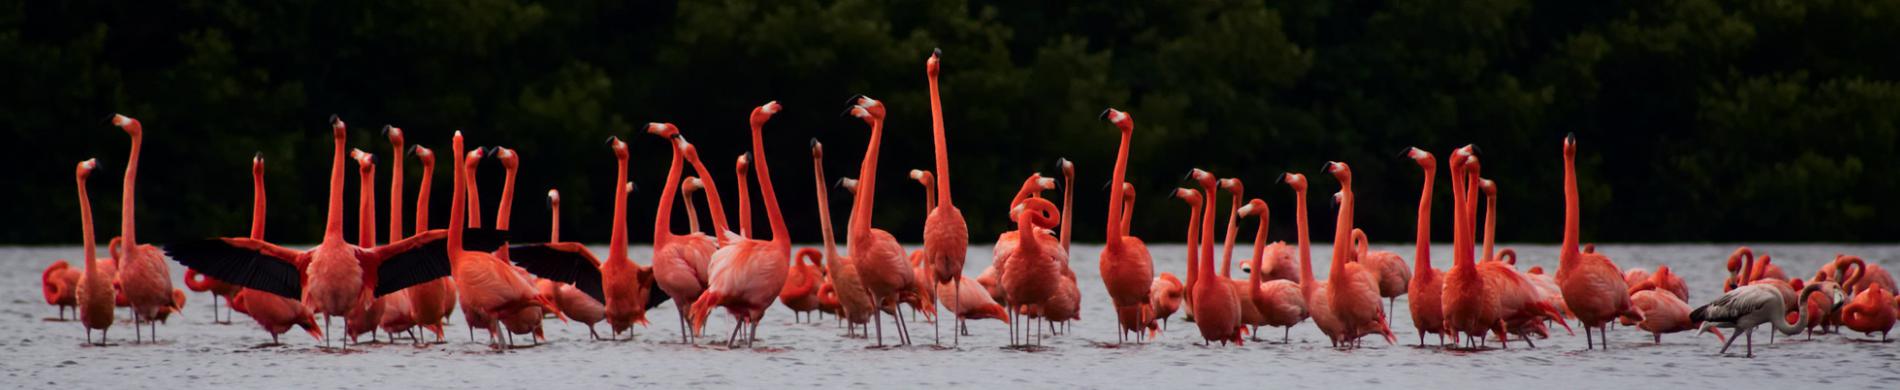 Cuba flamingo's in de Arimao rivier in Cuba